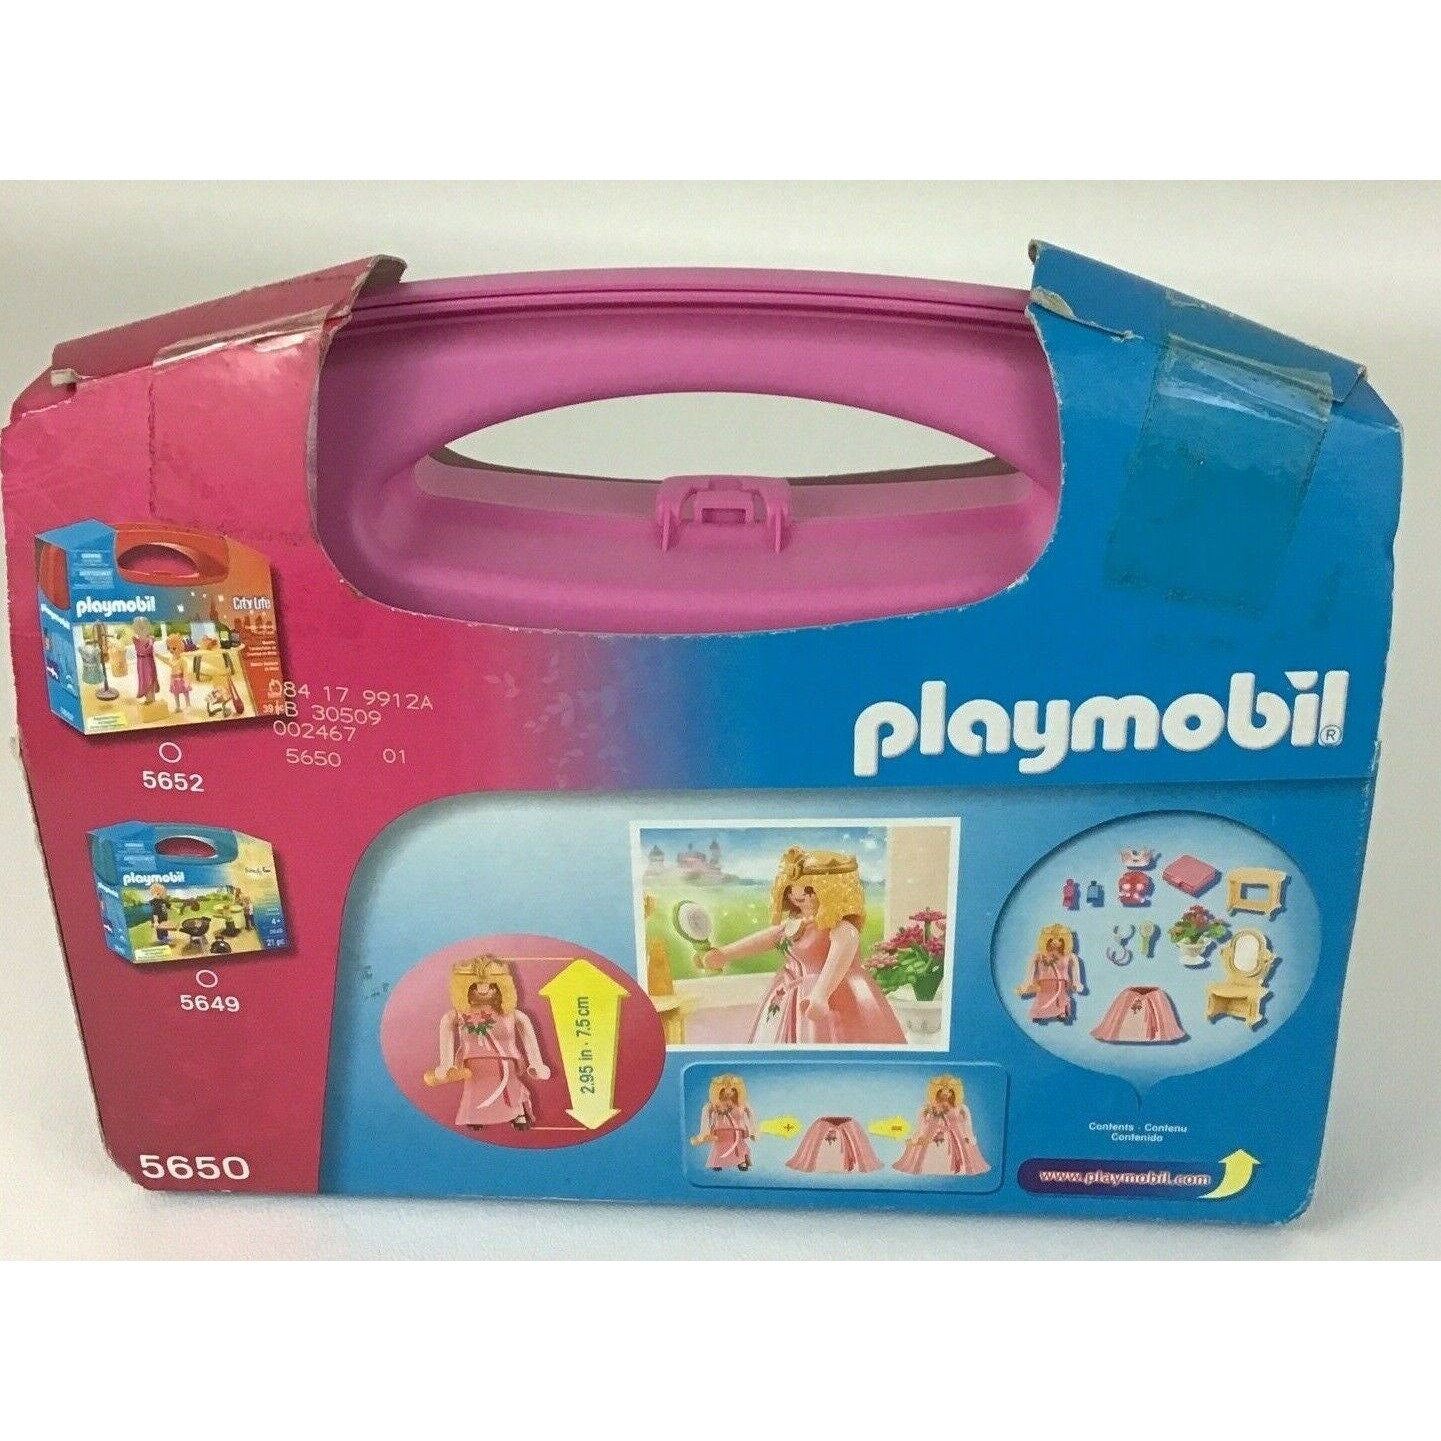 Playmobil Princess Vanity 5650 Pink Carry Case 31pcs New Sealed